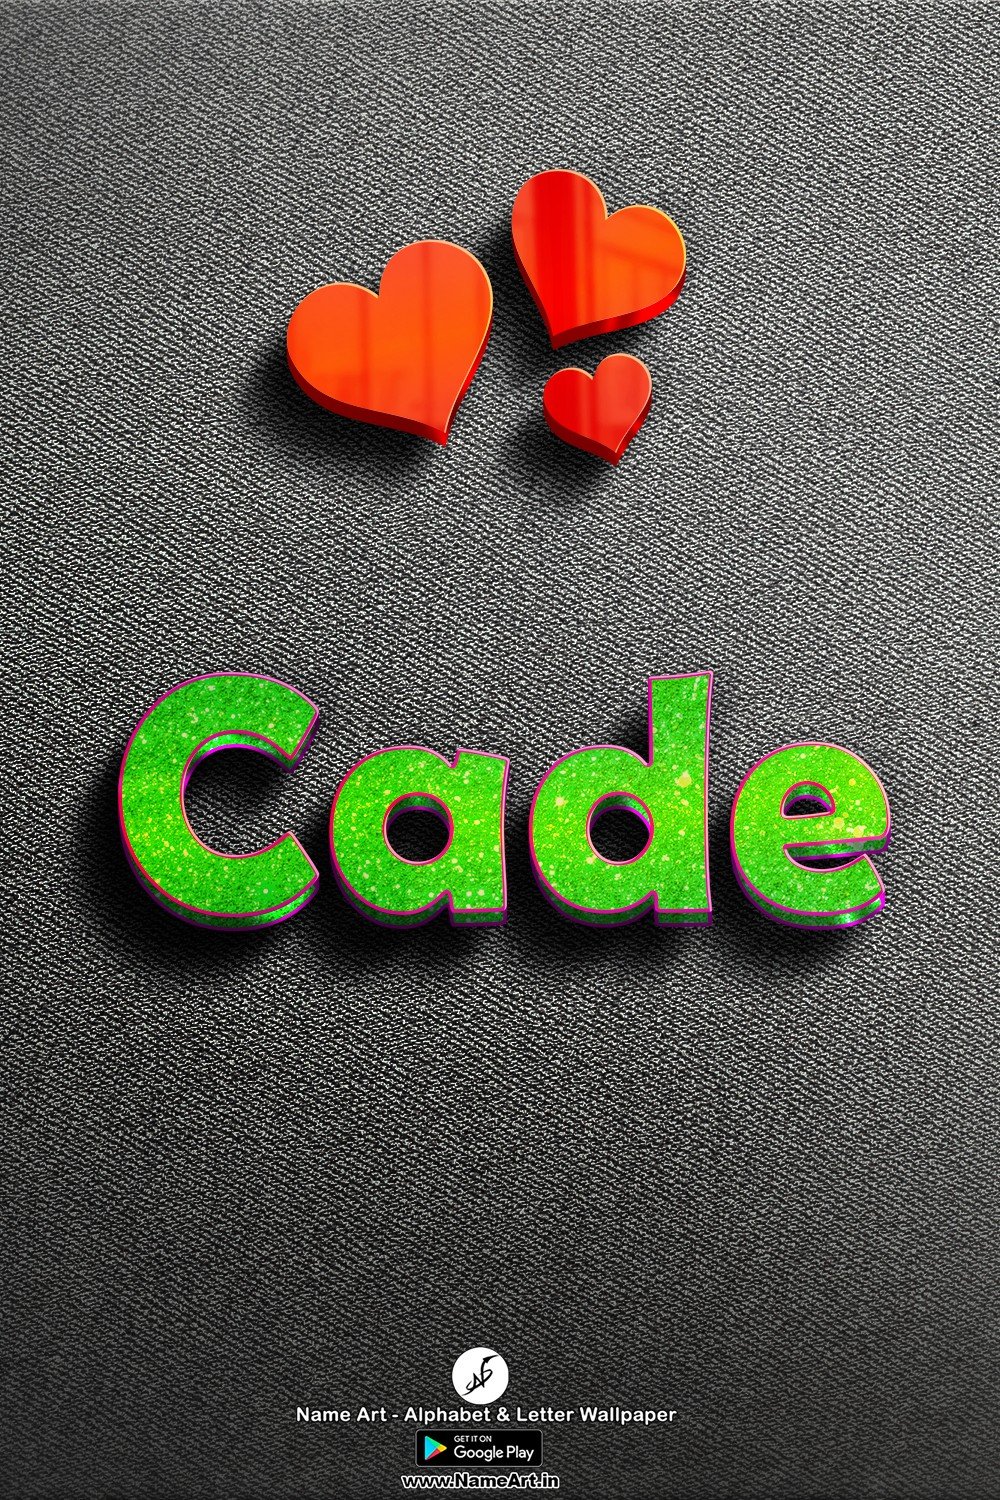 Cade | Whatsapp Status Cade | Happy Birthday Cade !! | New Whatsapp Status Cade Images |